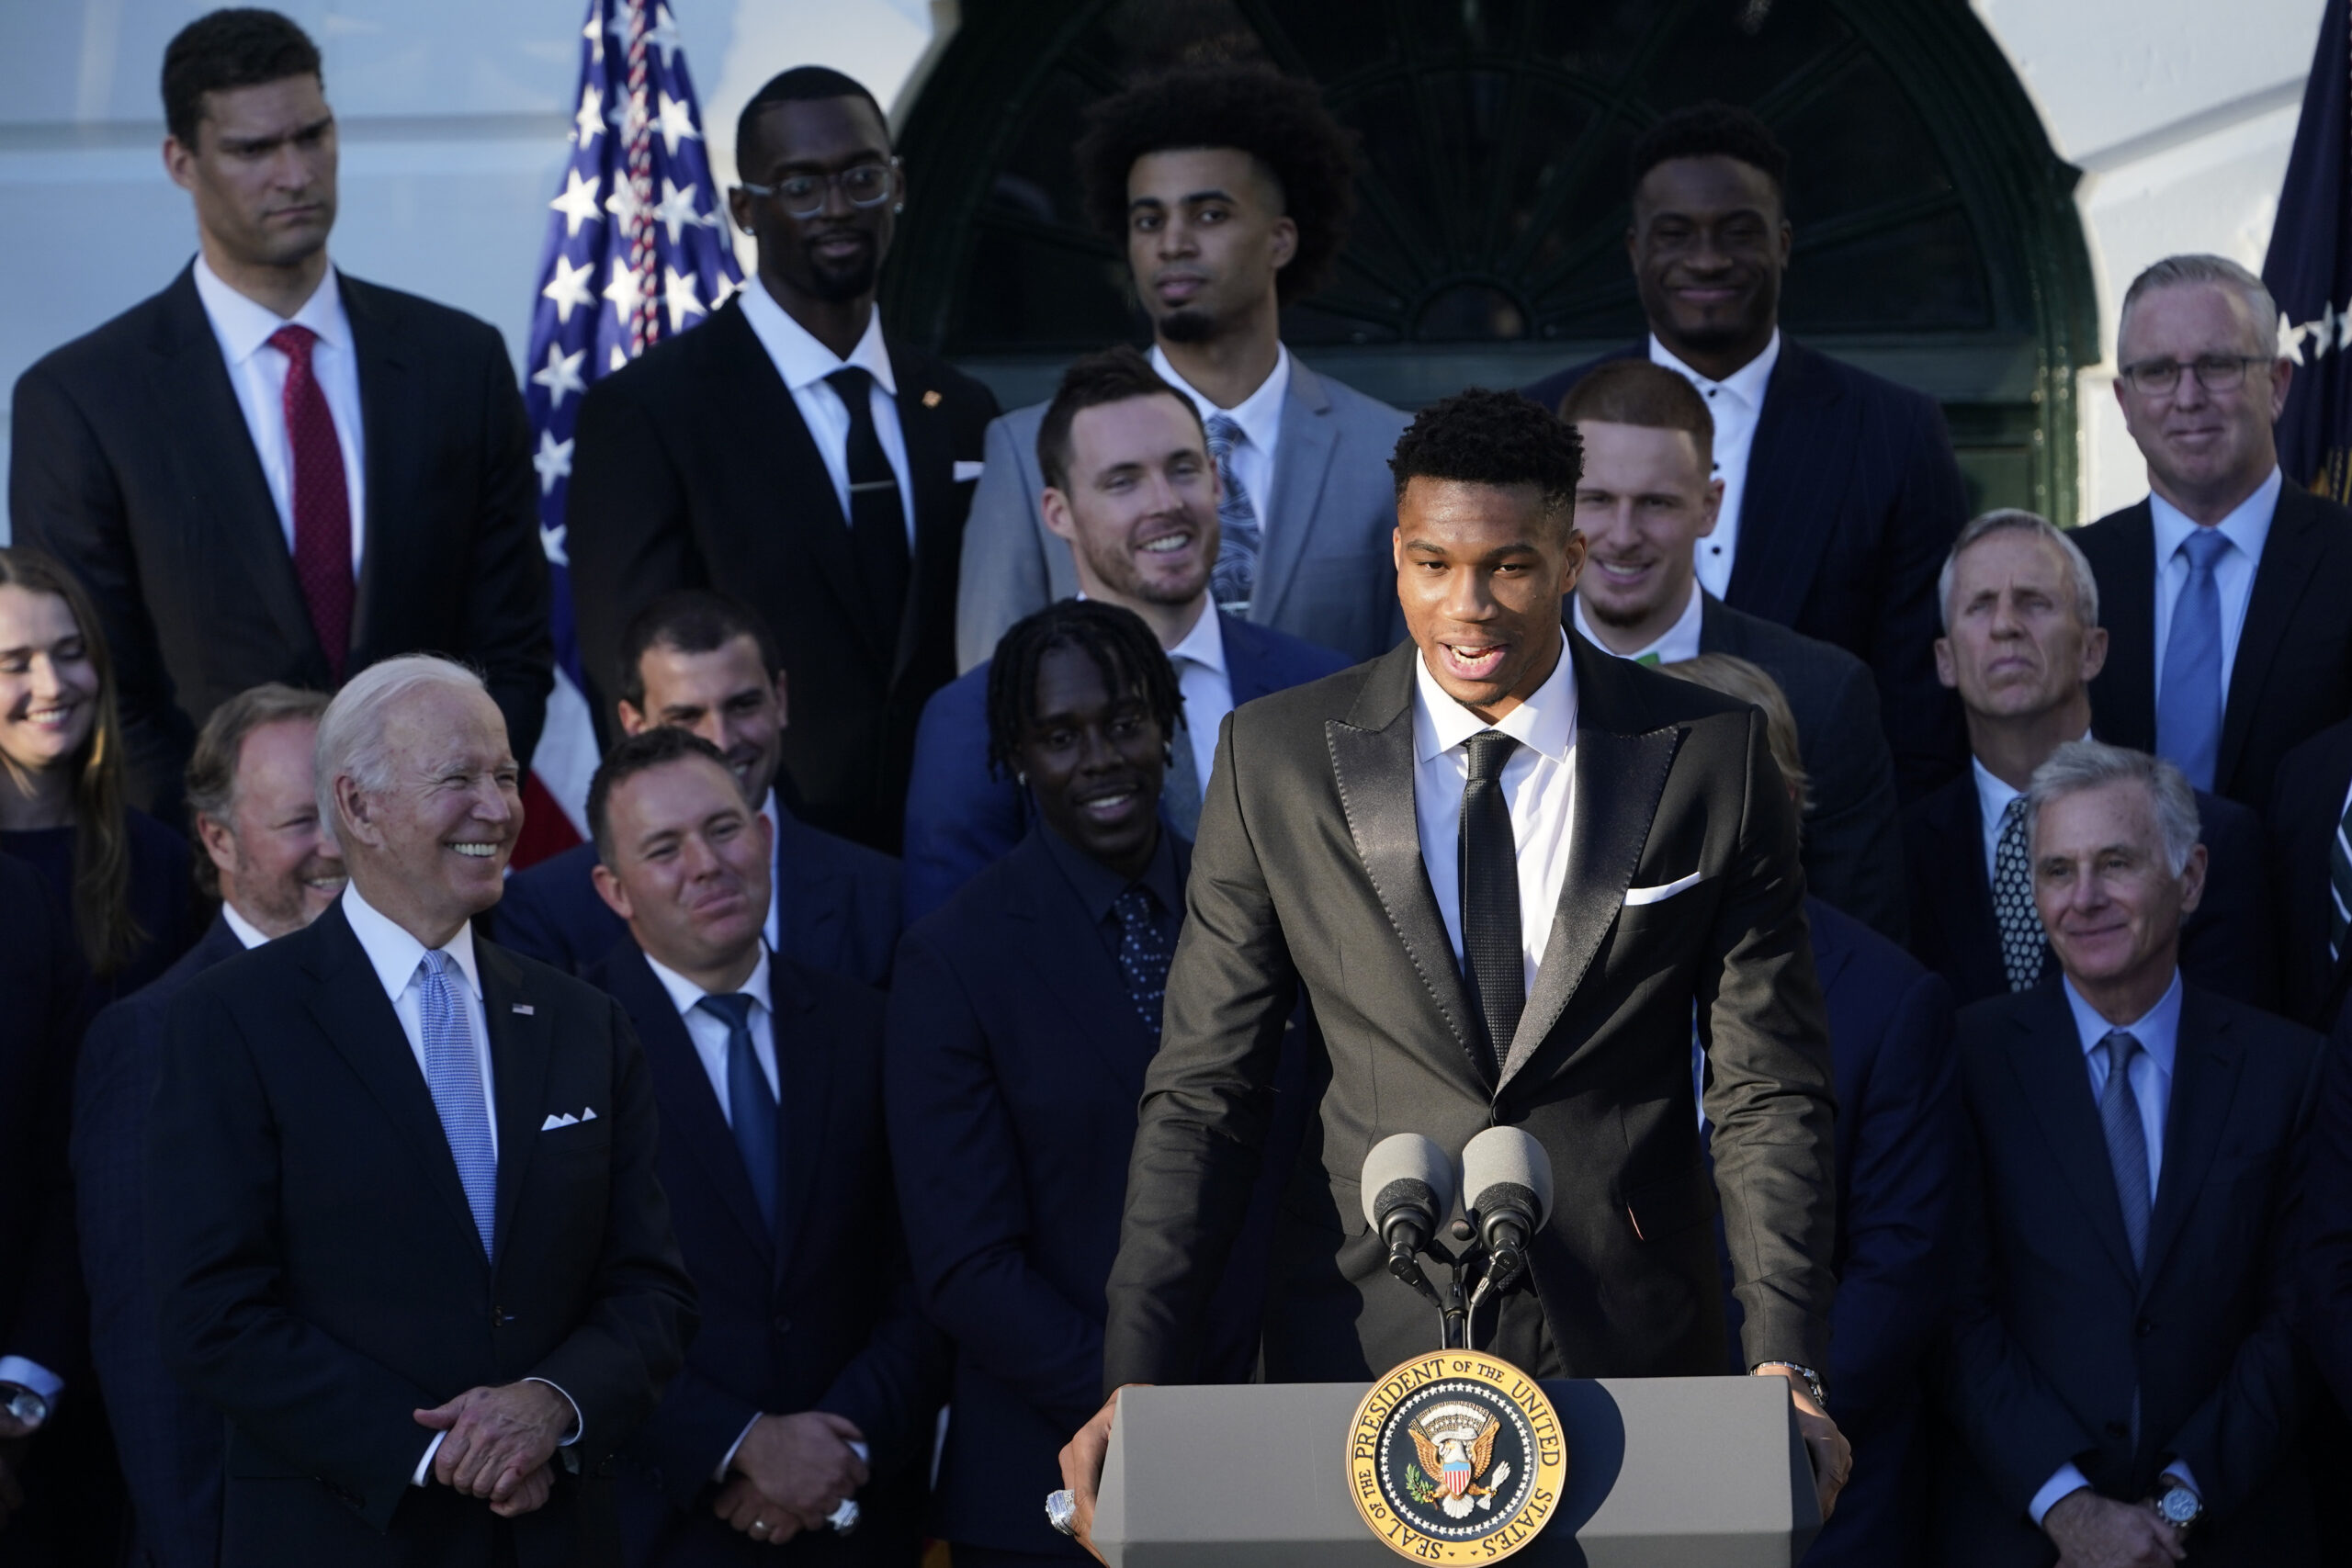 President Joe Biden listens as Giannis Antetokounmpo speaks during an event to welcome the Milwaukee Bucks basketball team to the White House